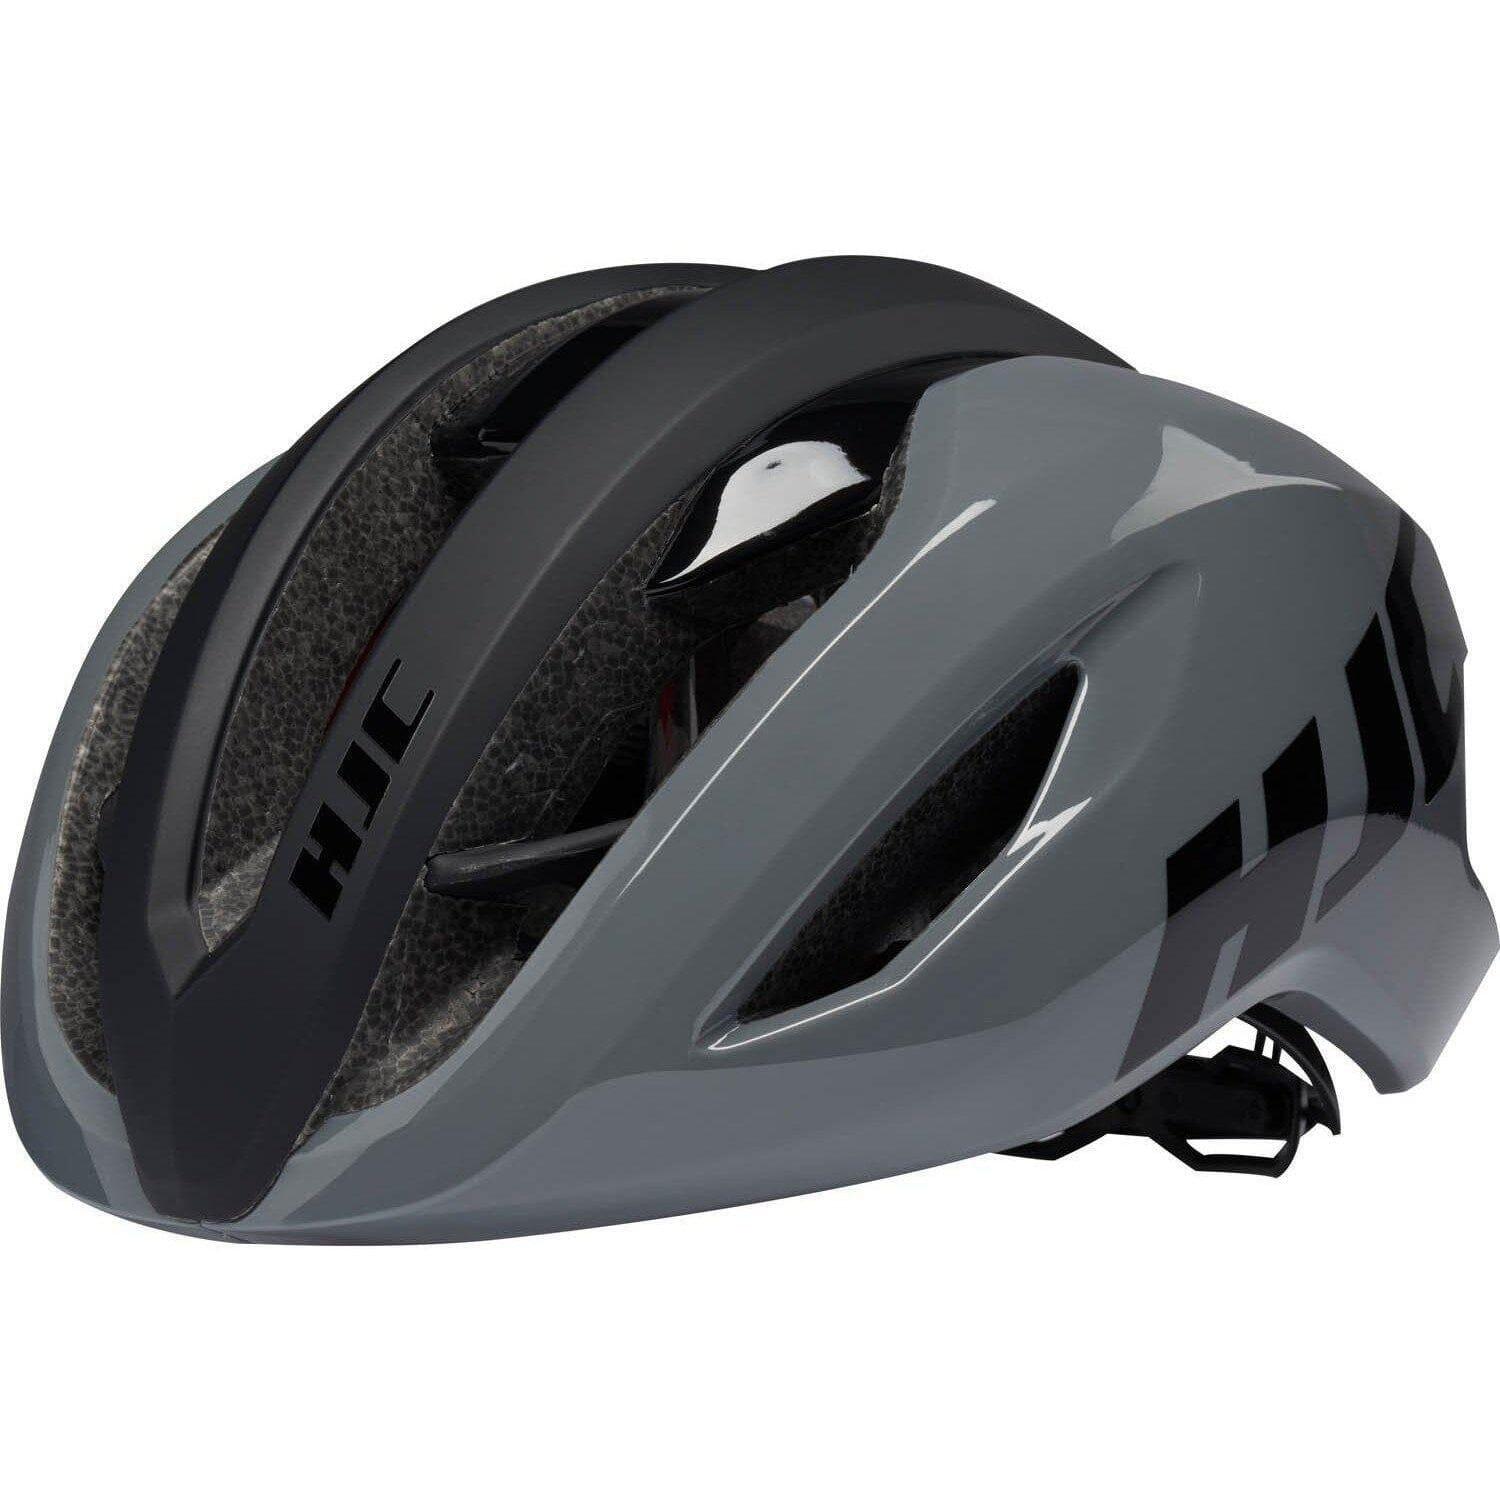 HJC Veleco: Streamlined, Comfy Helmet for Road Cycling 1/6